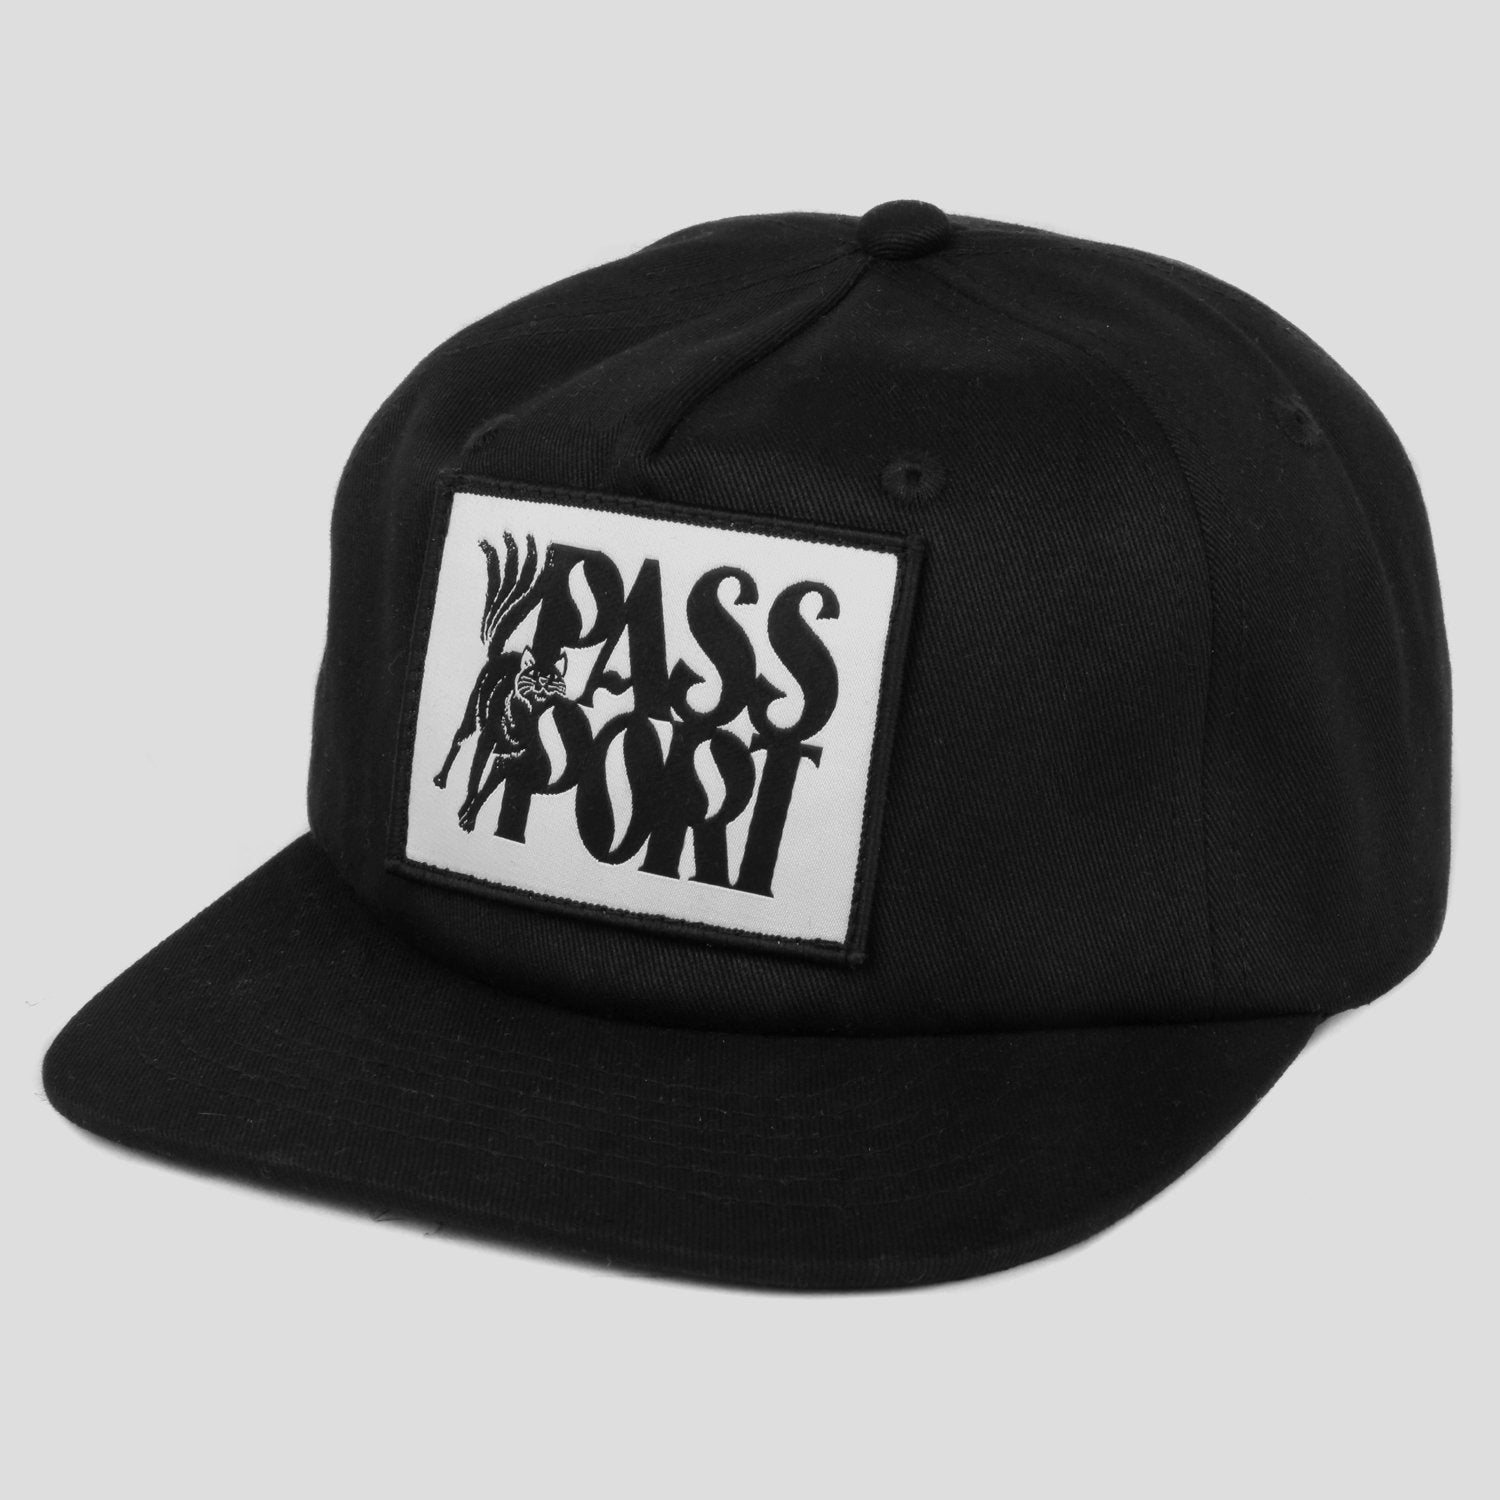 PASS~PORT "MOGGY" CAP BLACK